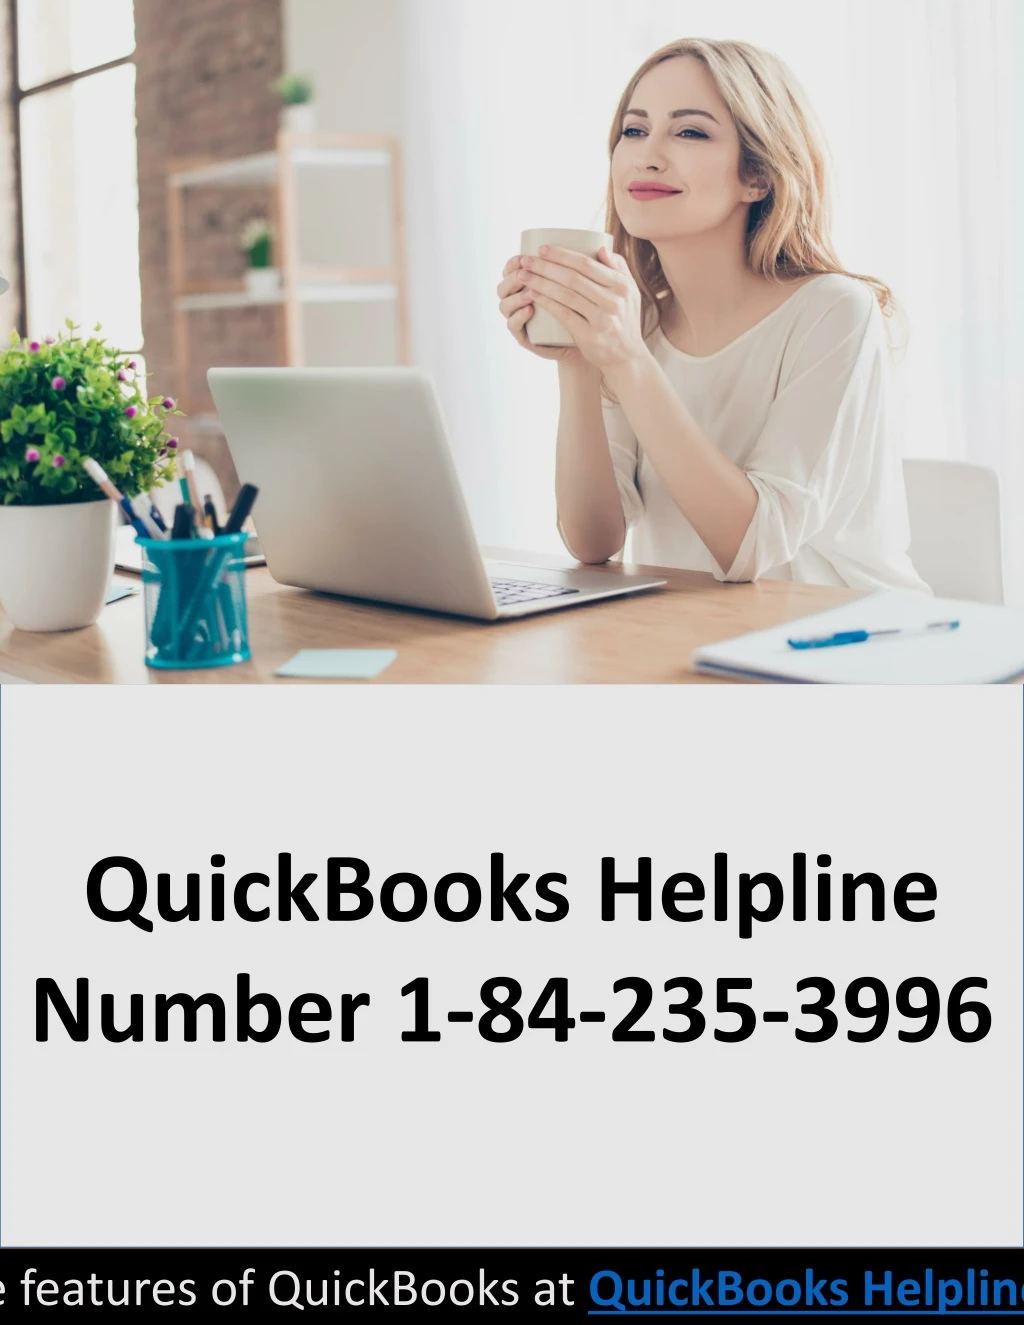 quickbooks helpline number 1 84 235 3996